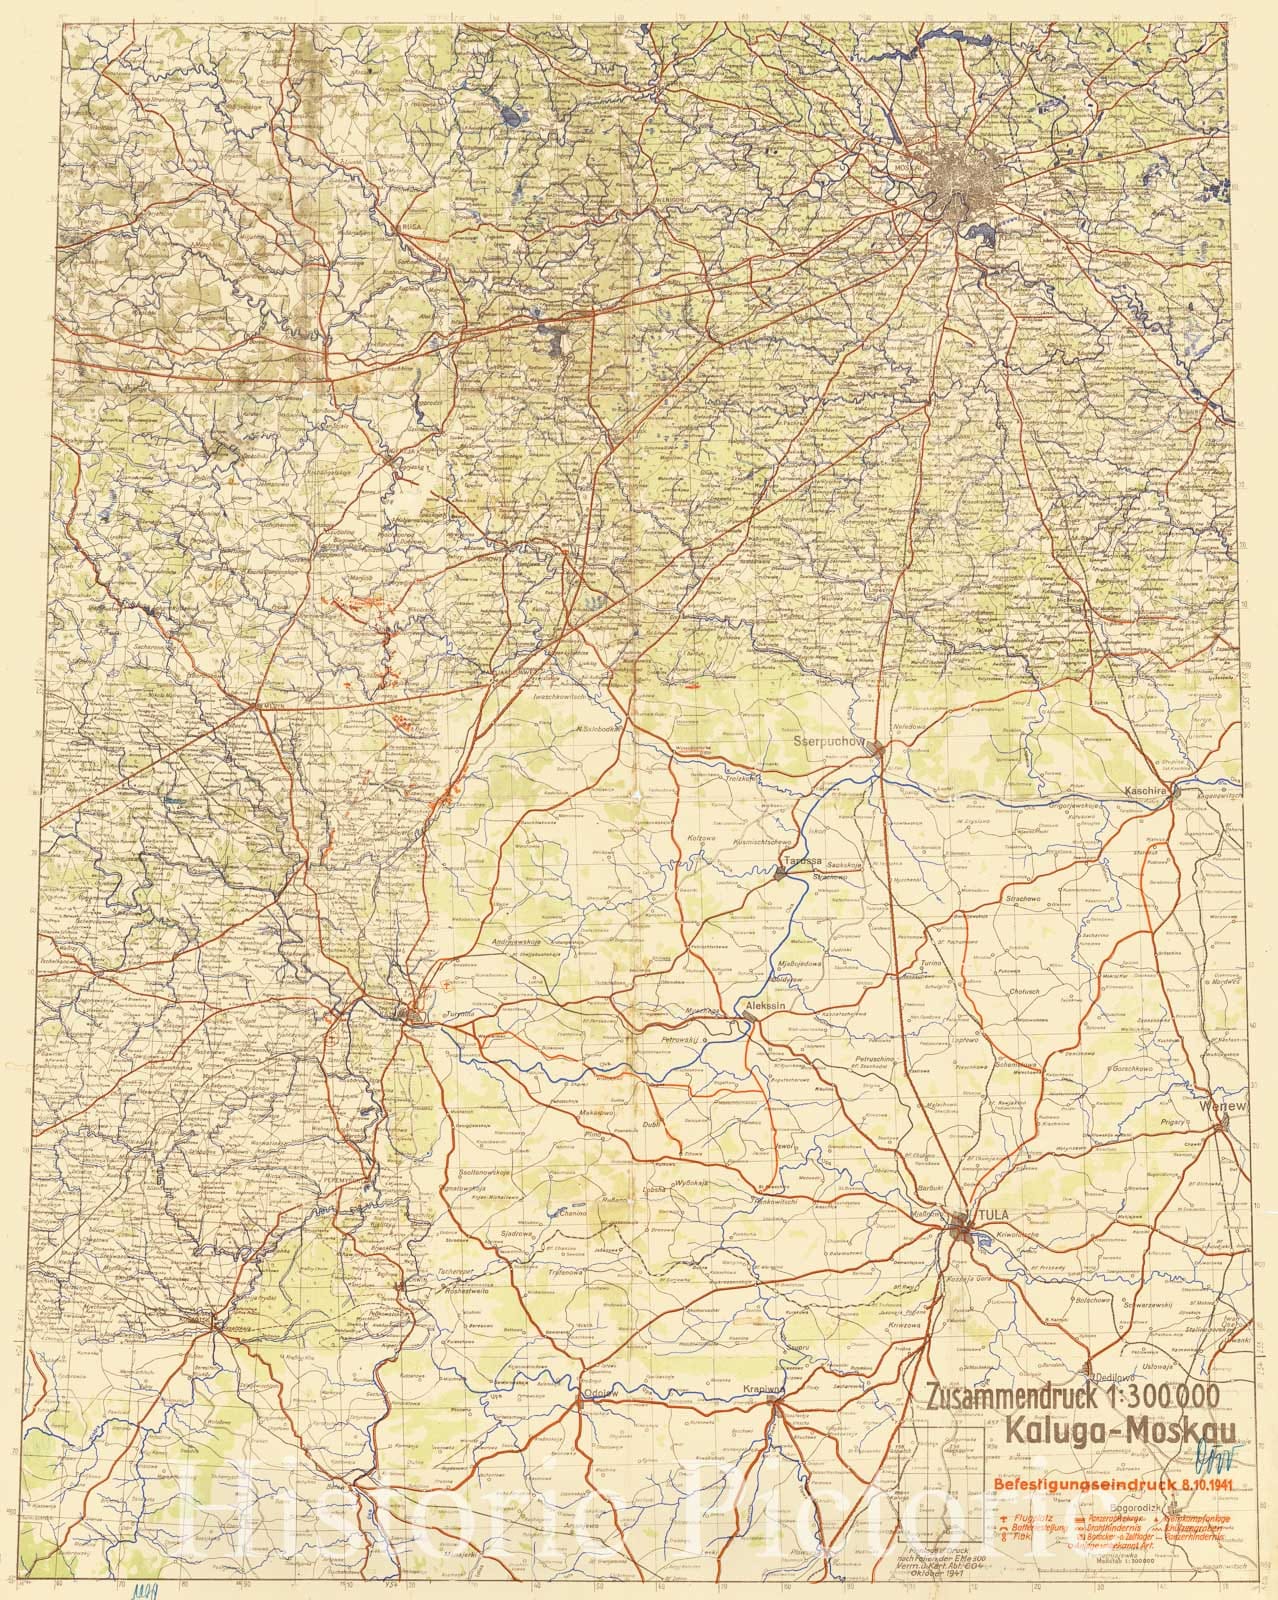 Historic Map : (Second World War - Battle of Moscow) Zusammendruck 1:300 000 Kaluga-Moskau Befestigungseindruck 8.10.1941, 1941, Anonymous, Vintage Wall Art